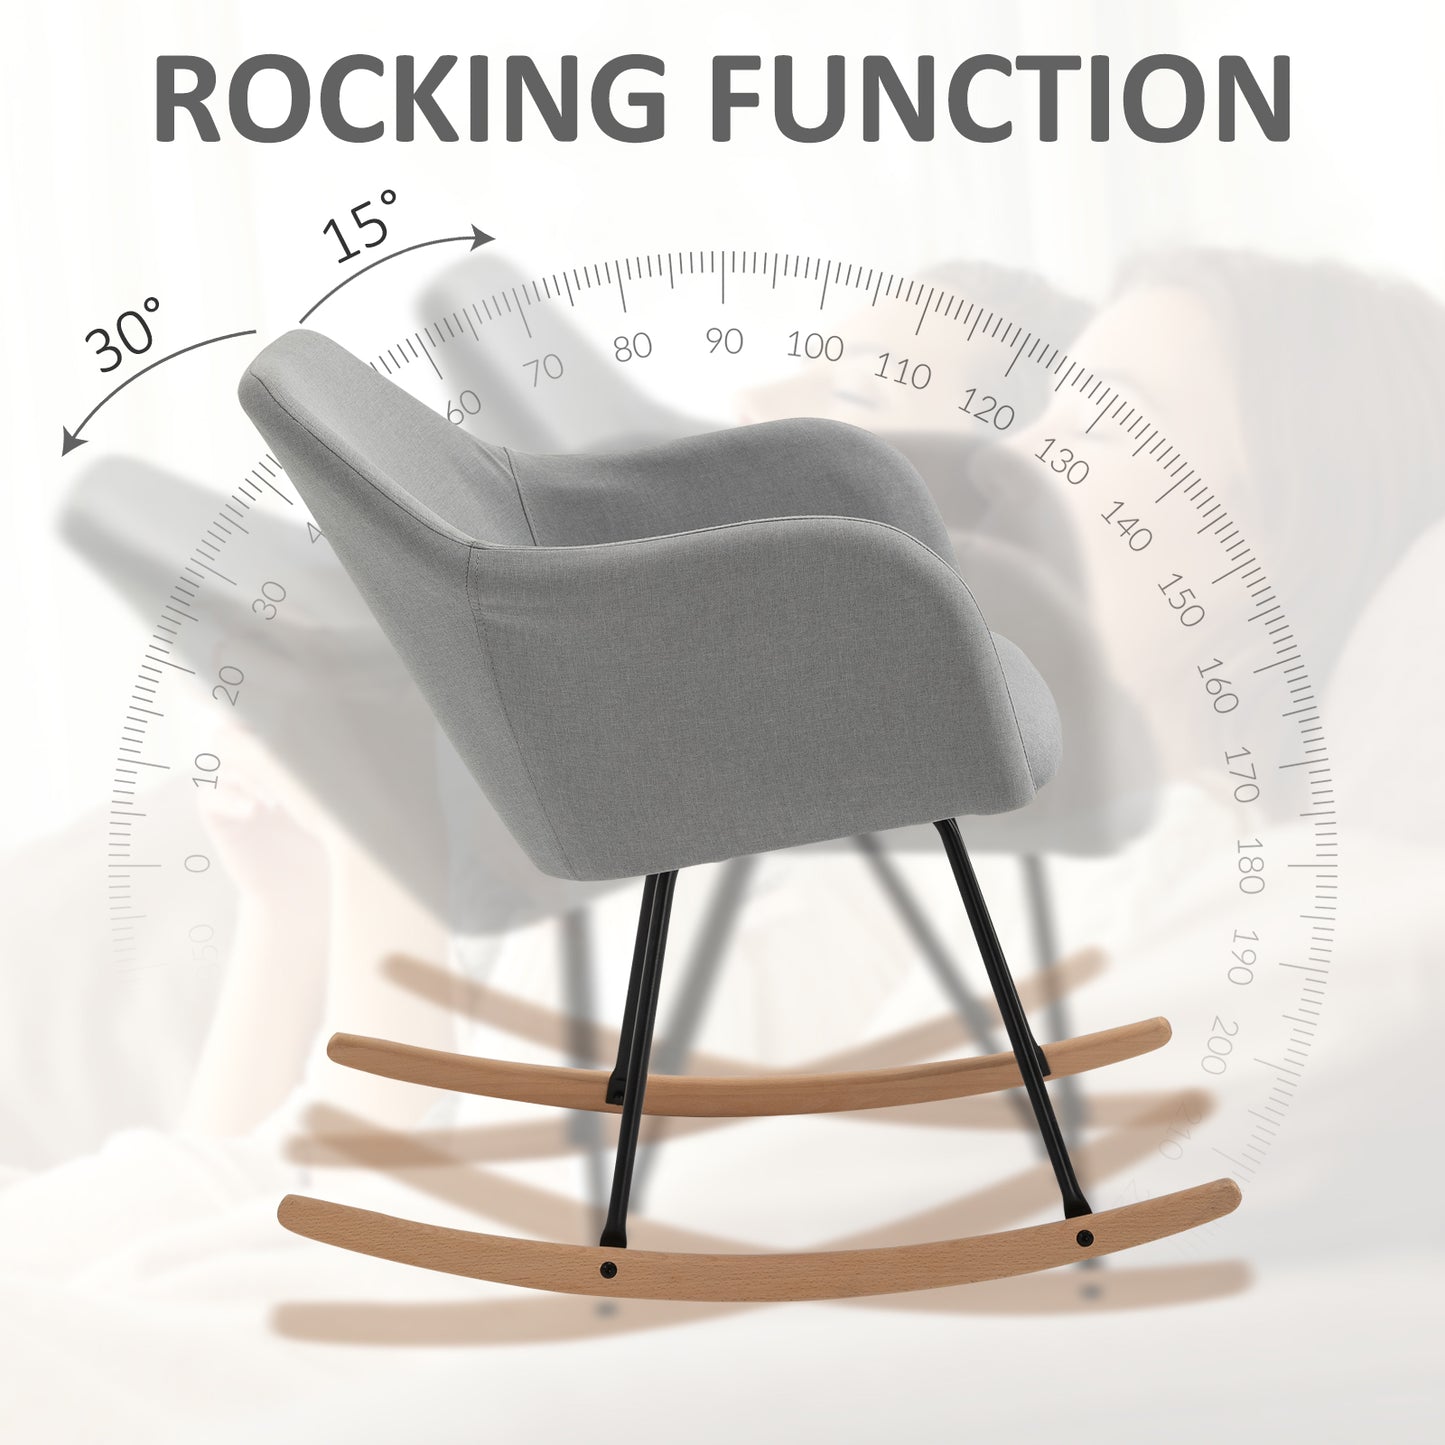 HOMCOM Polyester Linen Upholstered Rocking Armchair Indoor Rocking Chair Light Grey